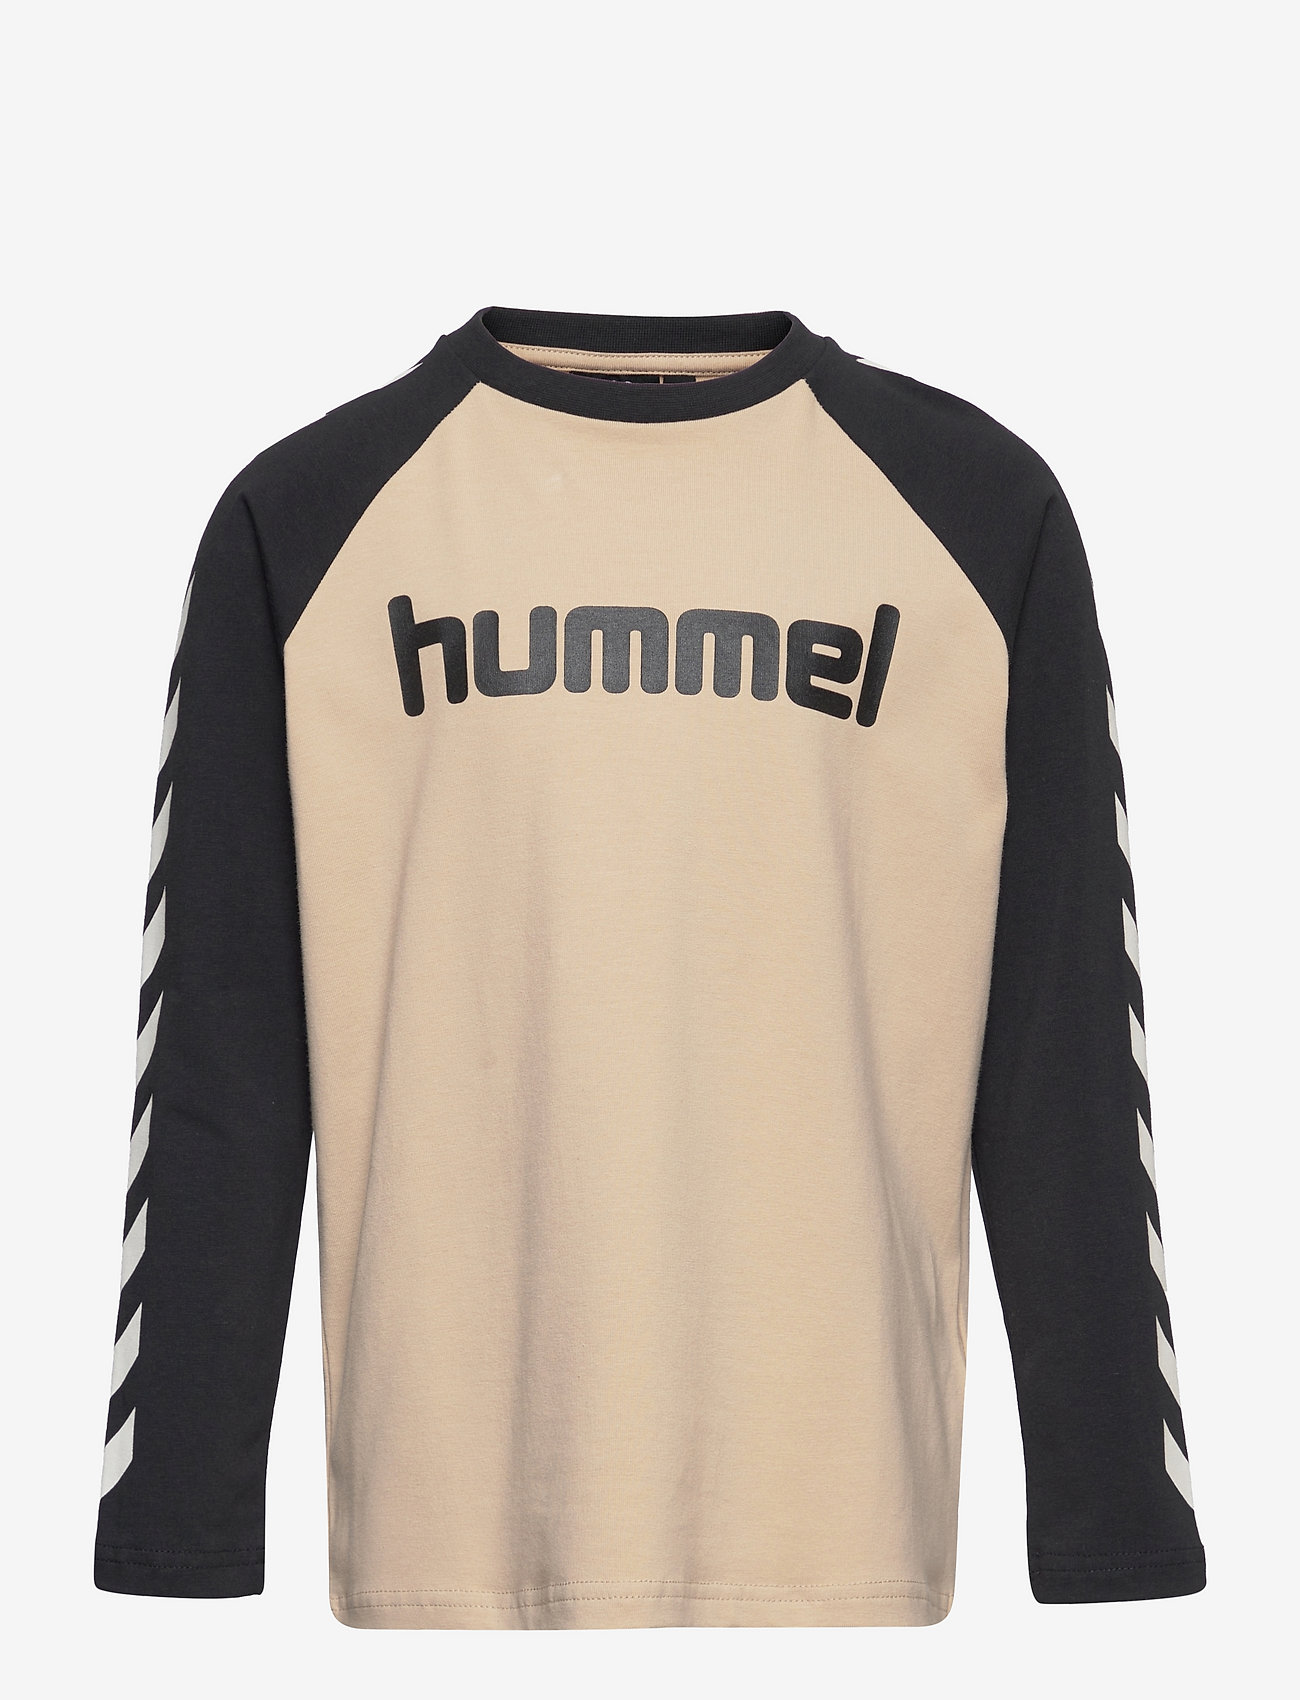 Hummel - hmlBOYS T-SHIRT L/S - pitkähihaiset paidat - humus - 0